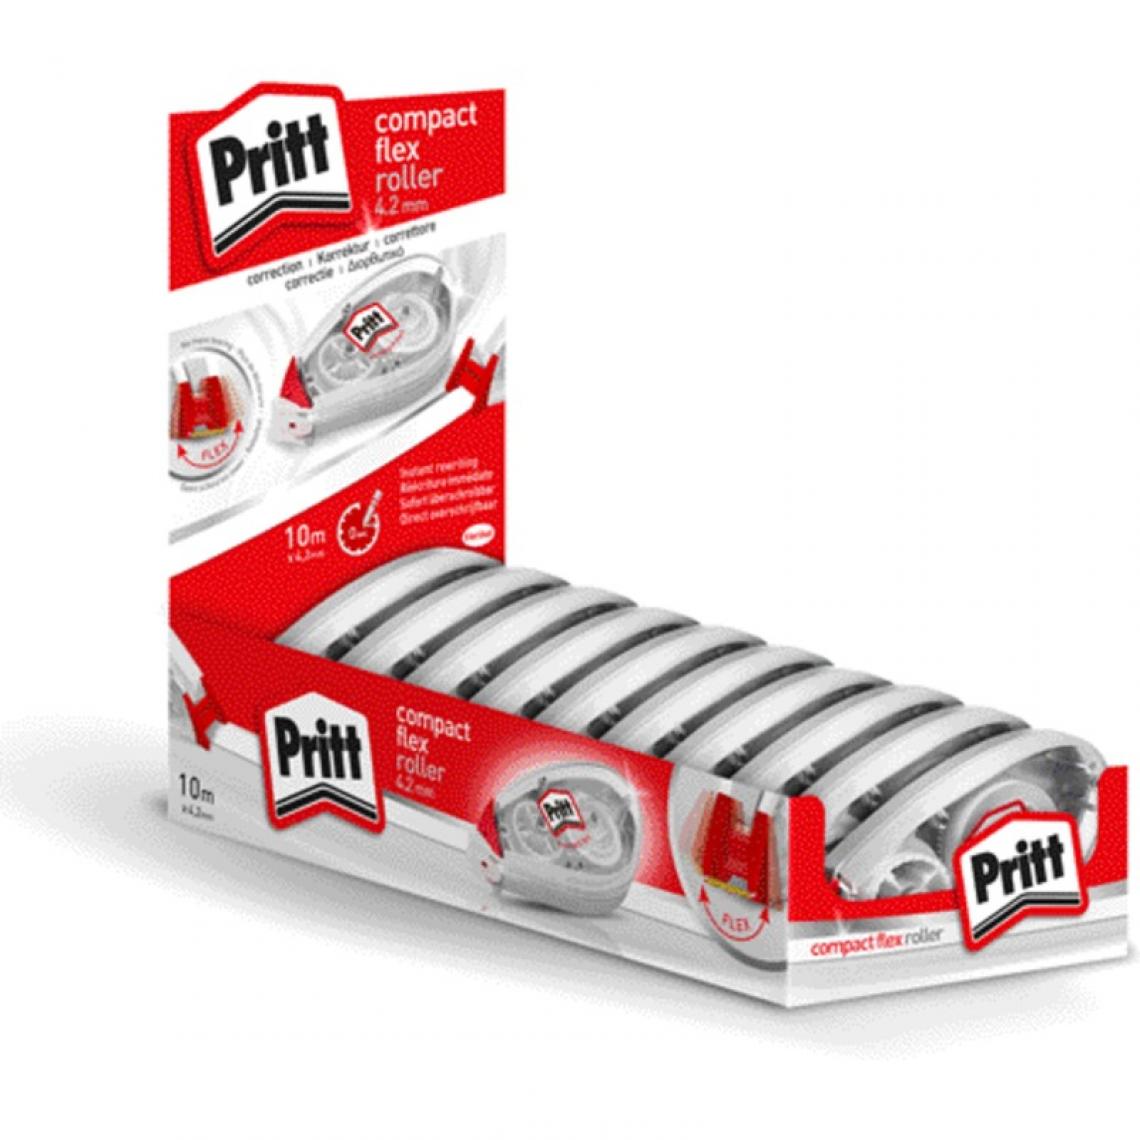 Pritt - Pritt Roller correcteur Compact Flex, 4,2 mm x 10 m () - Accessoires Bureau